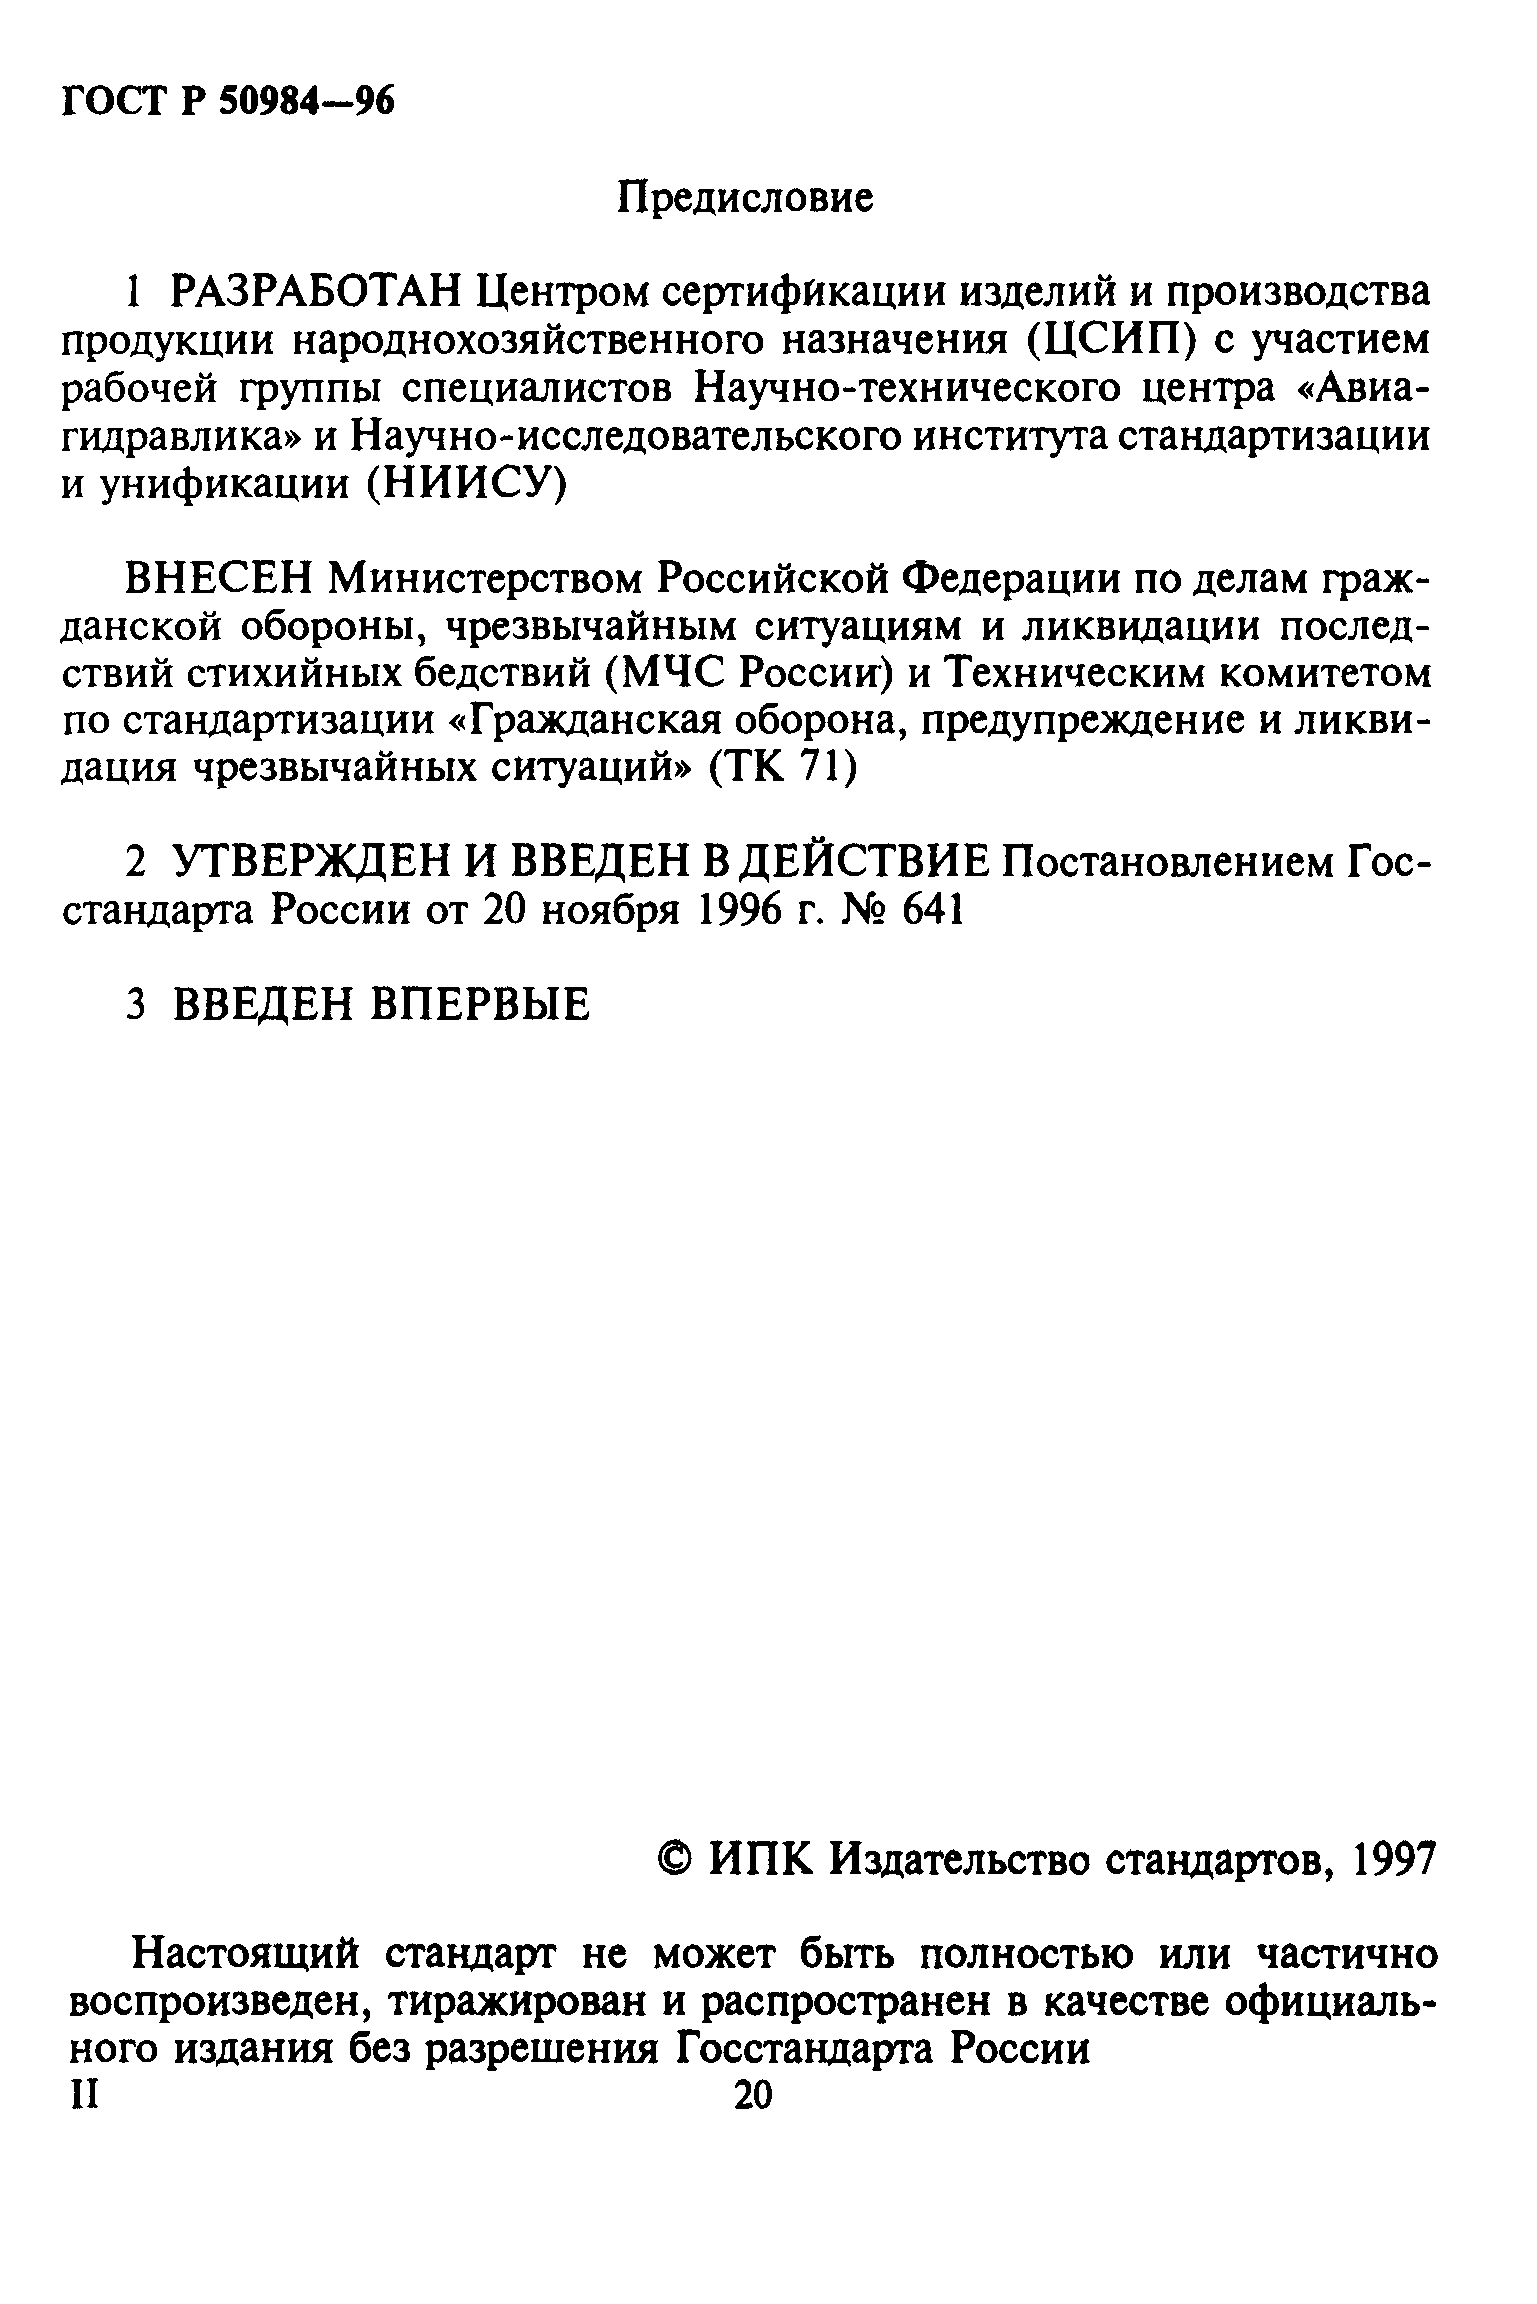 ГОСТ Р 50984-96